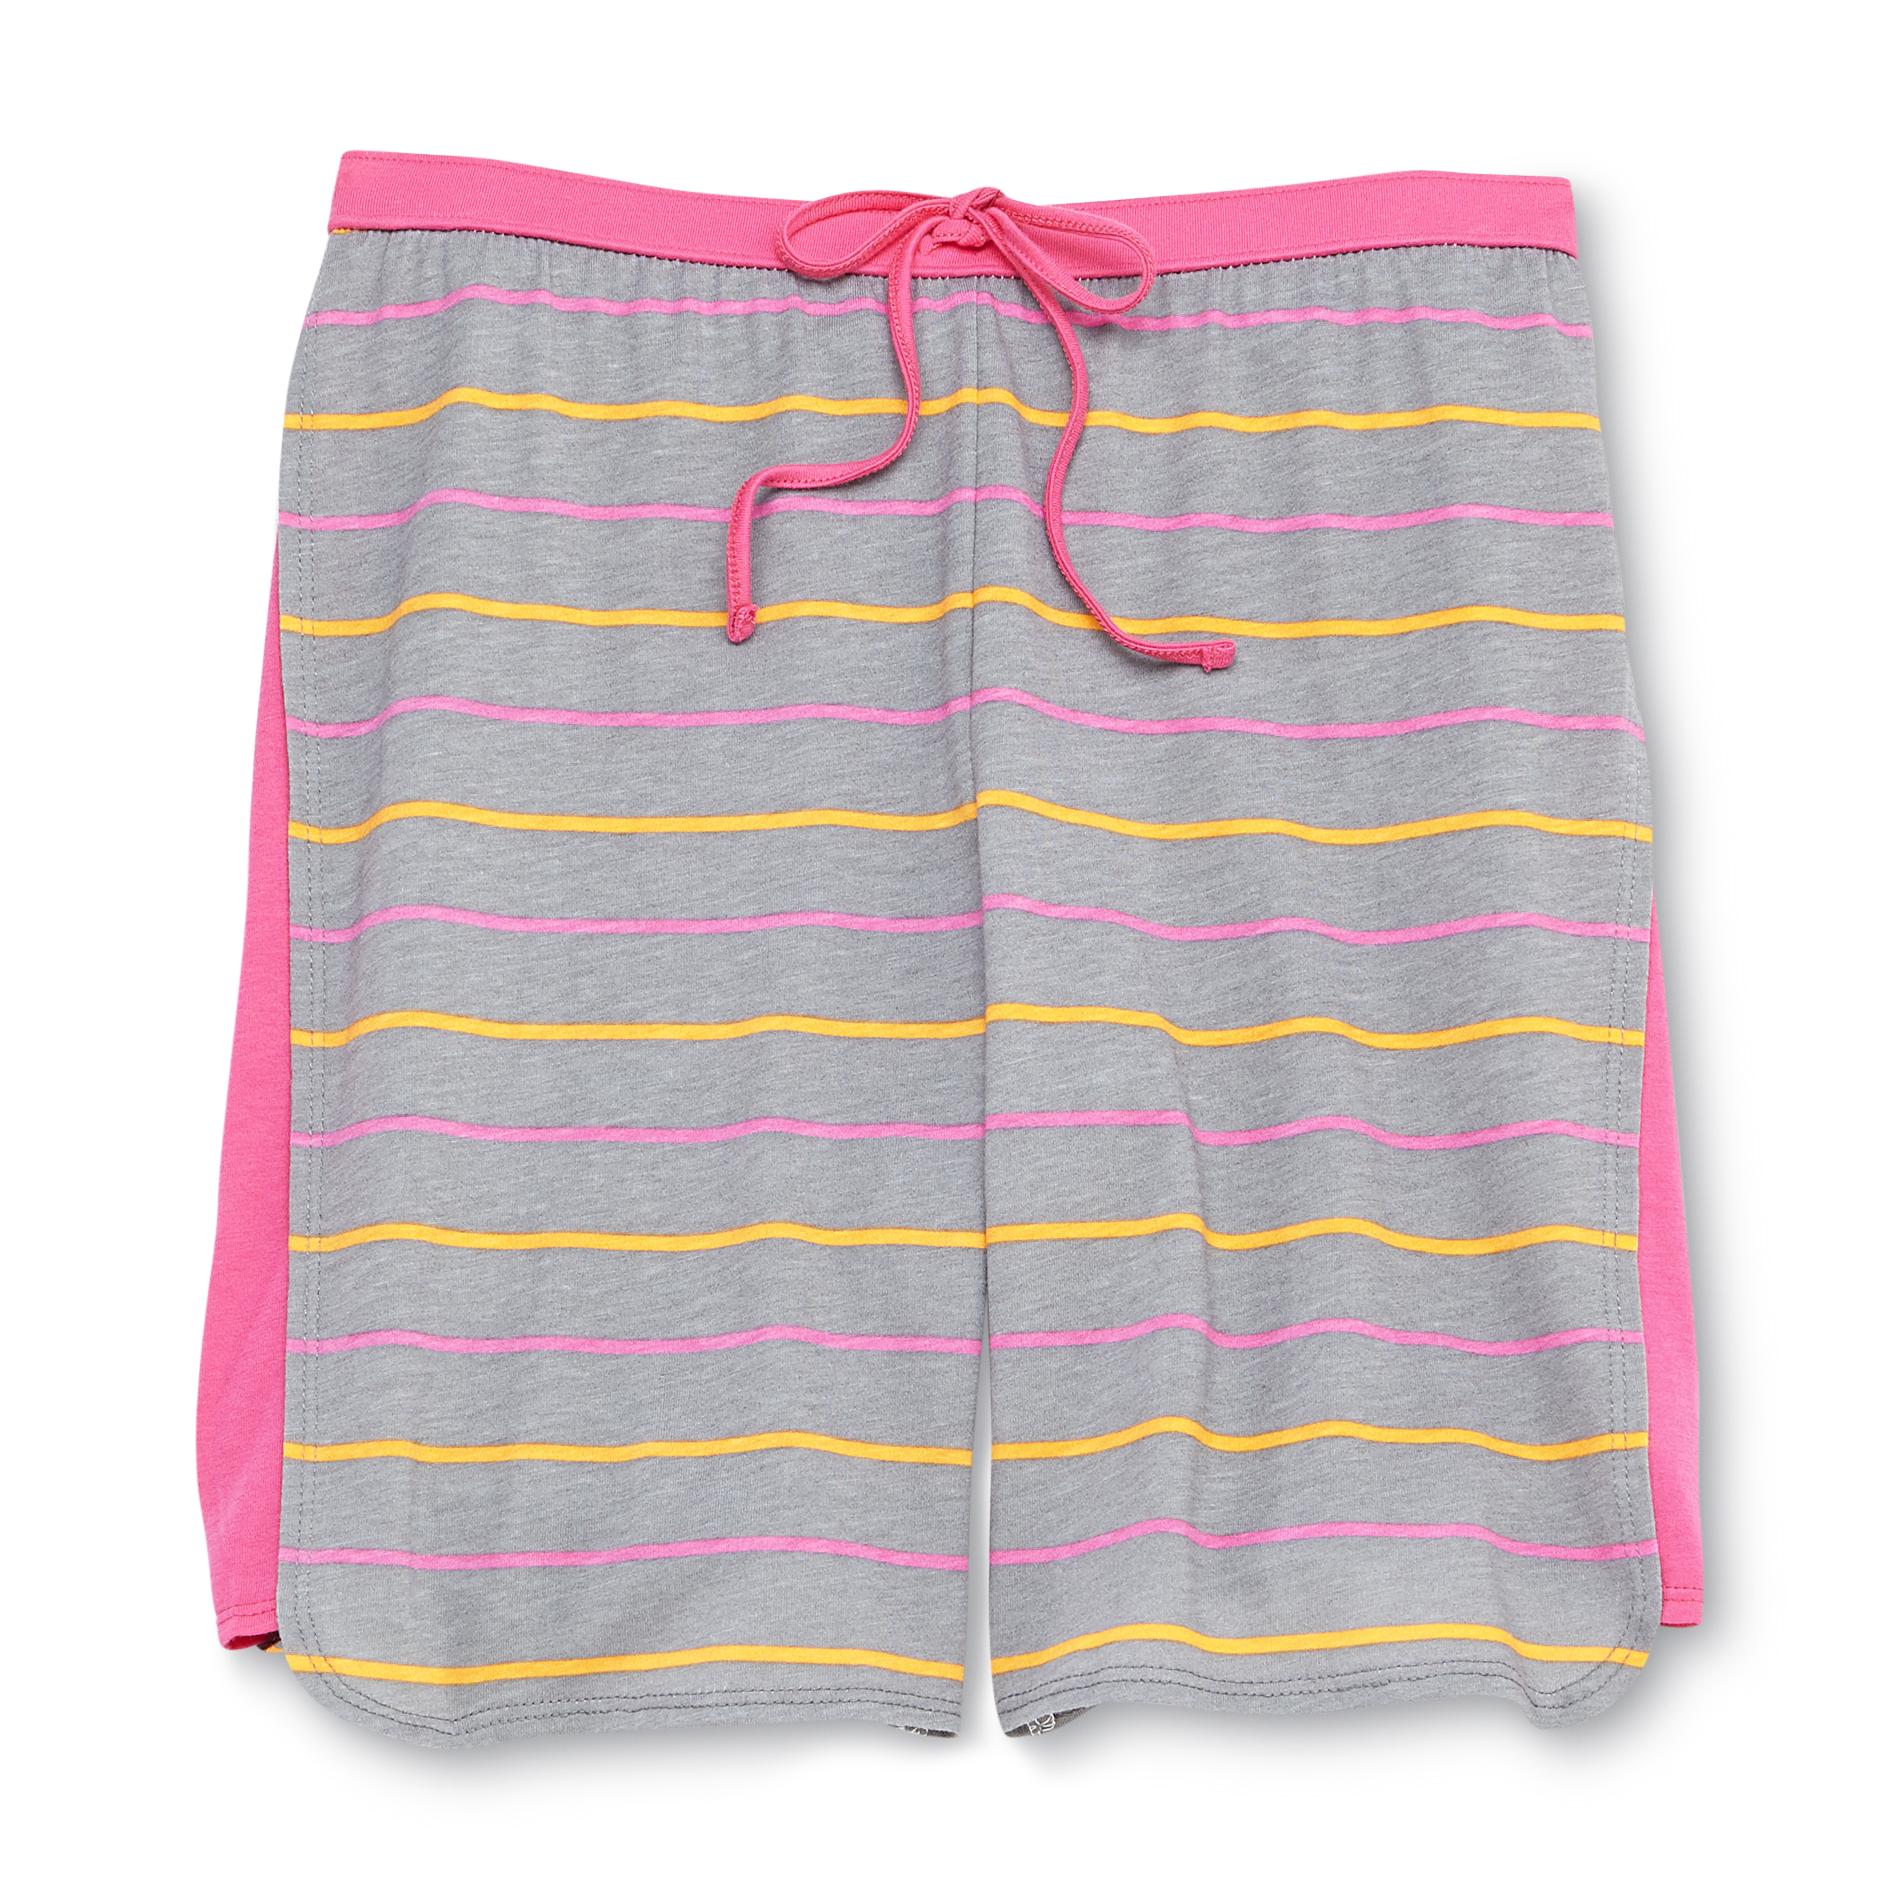 Joe Boxer Women's Knit Bermuda Sleep Shorts - Striped